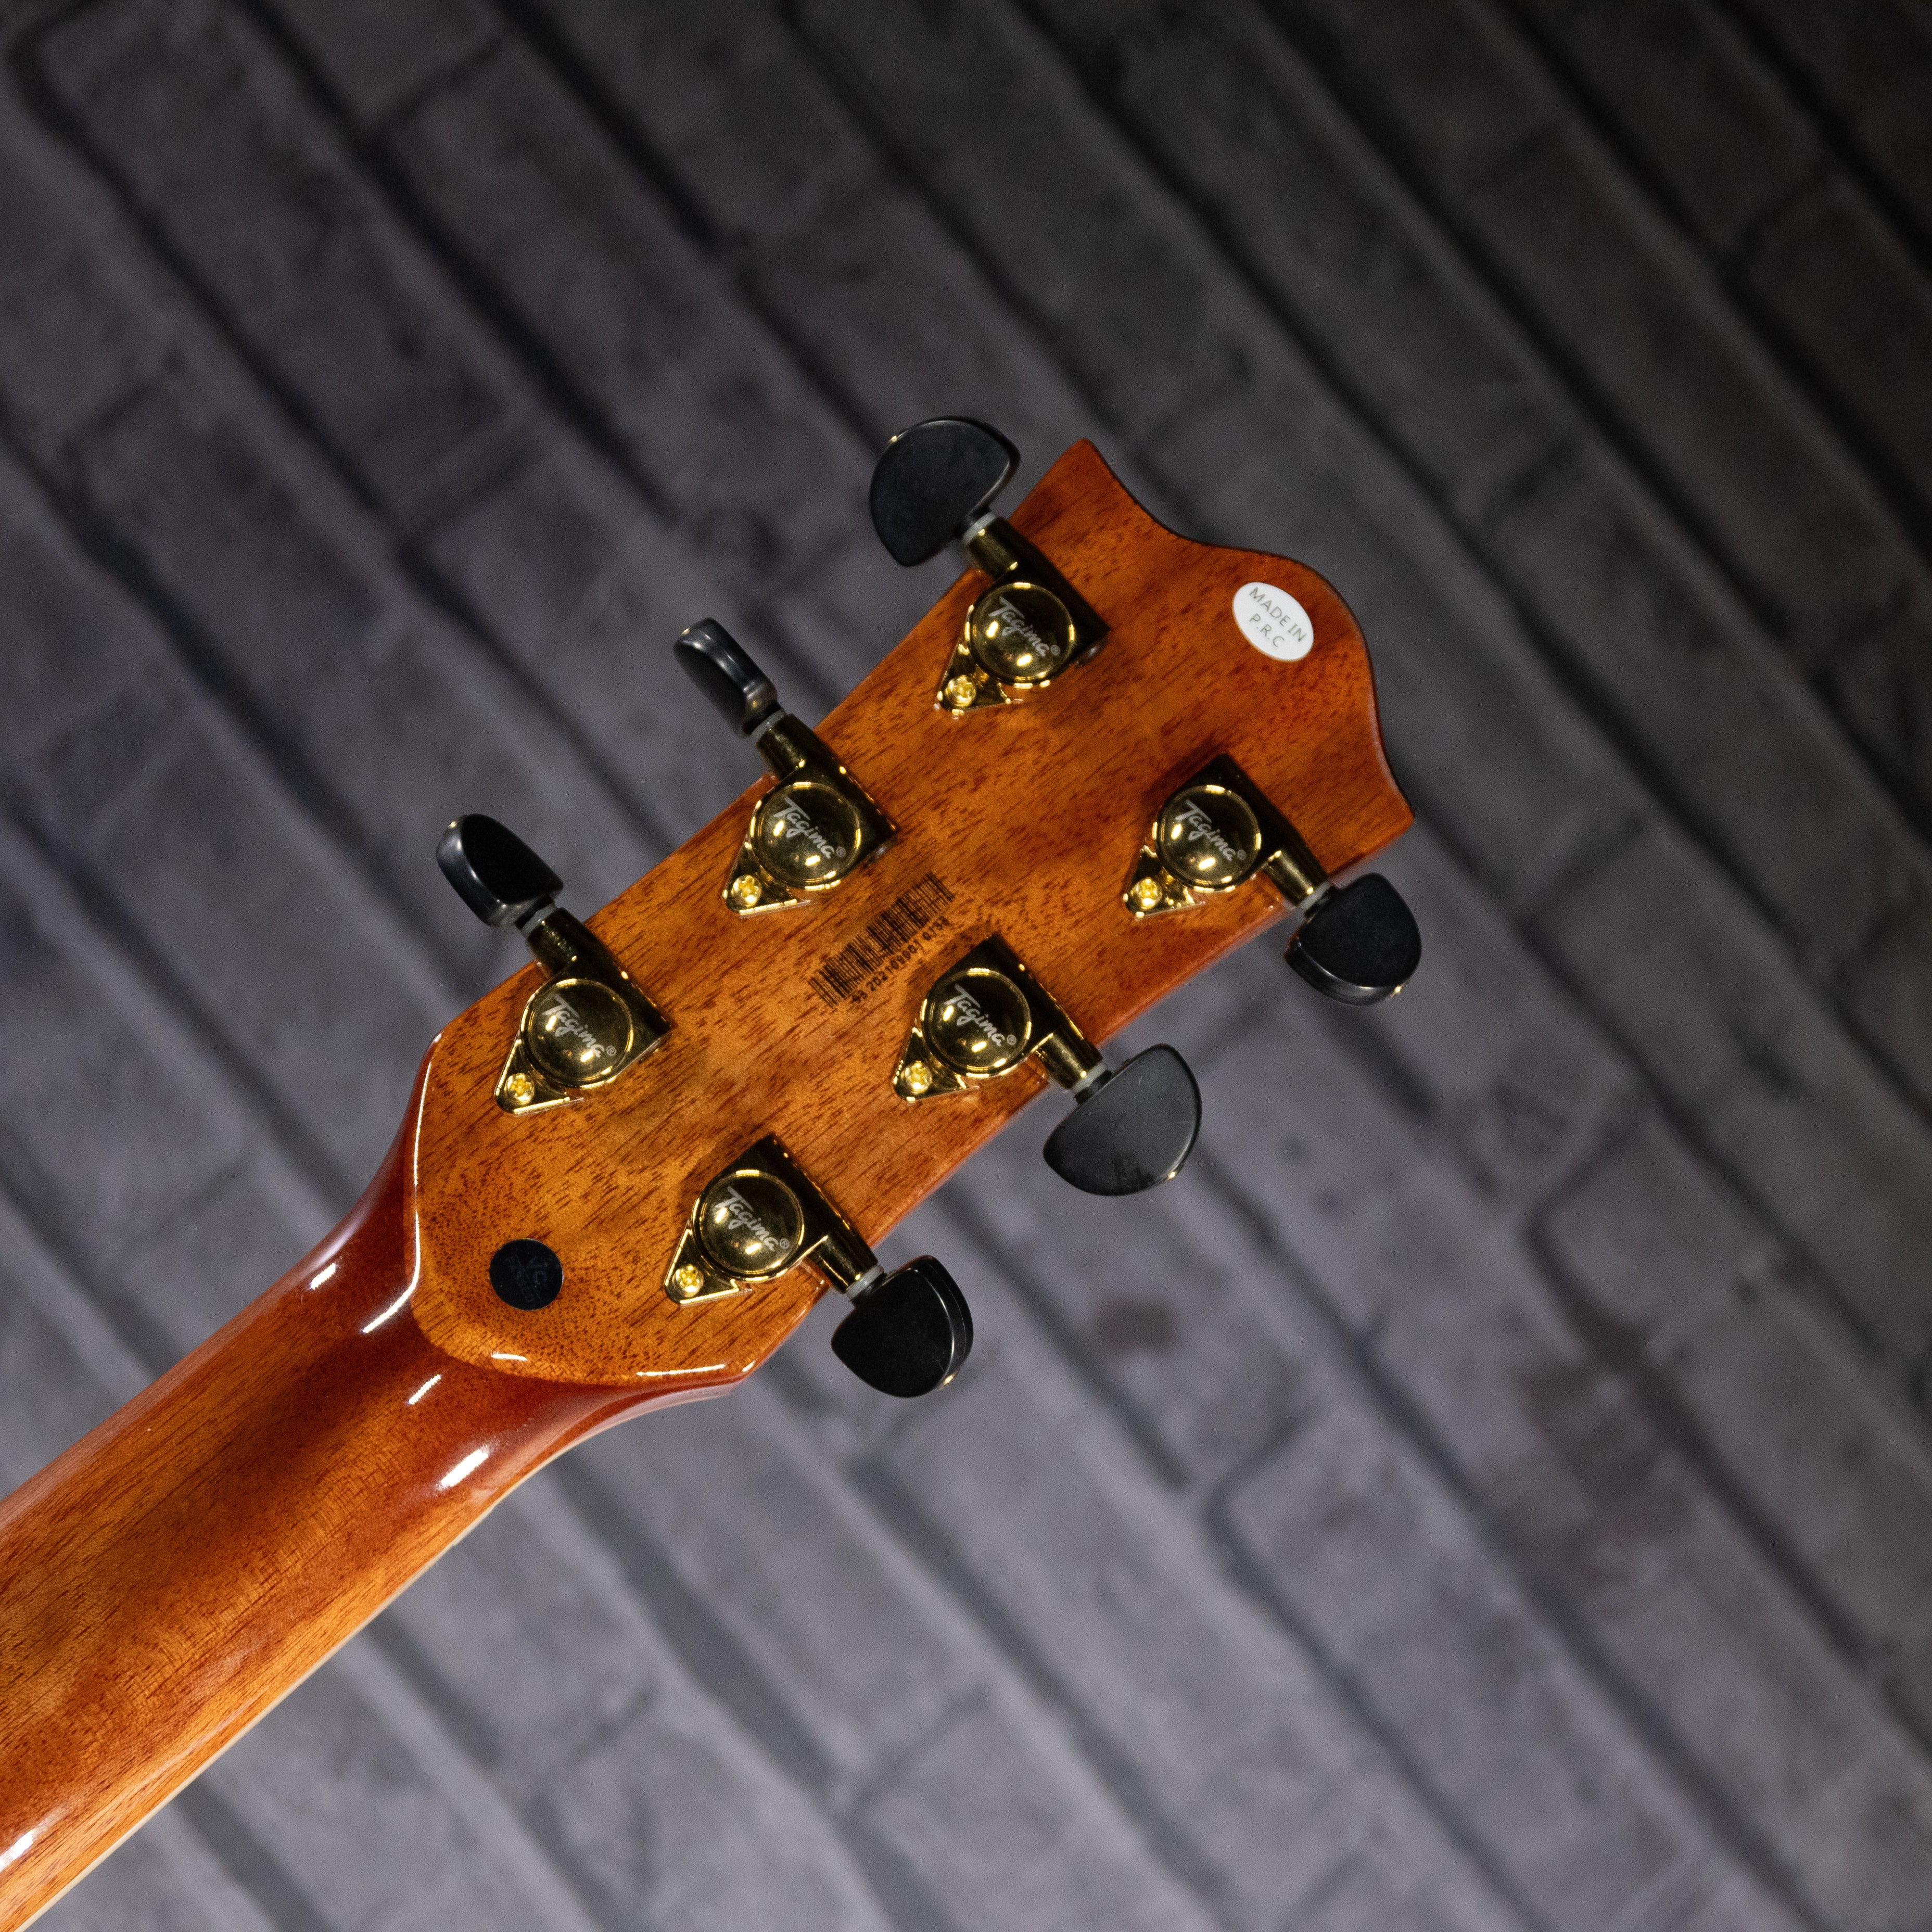 Tagima Canada Series Vancouver EQ Acoustic Guitar (Cherryburst)